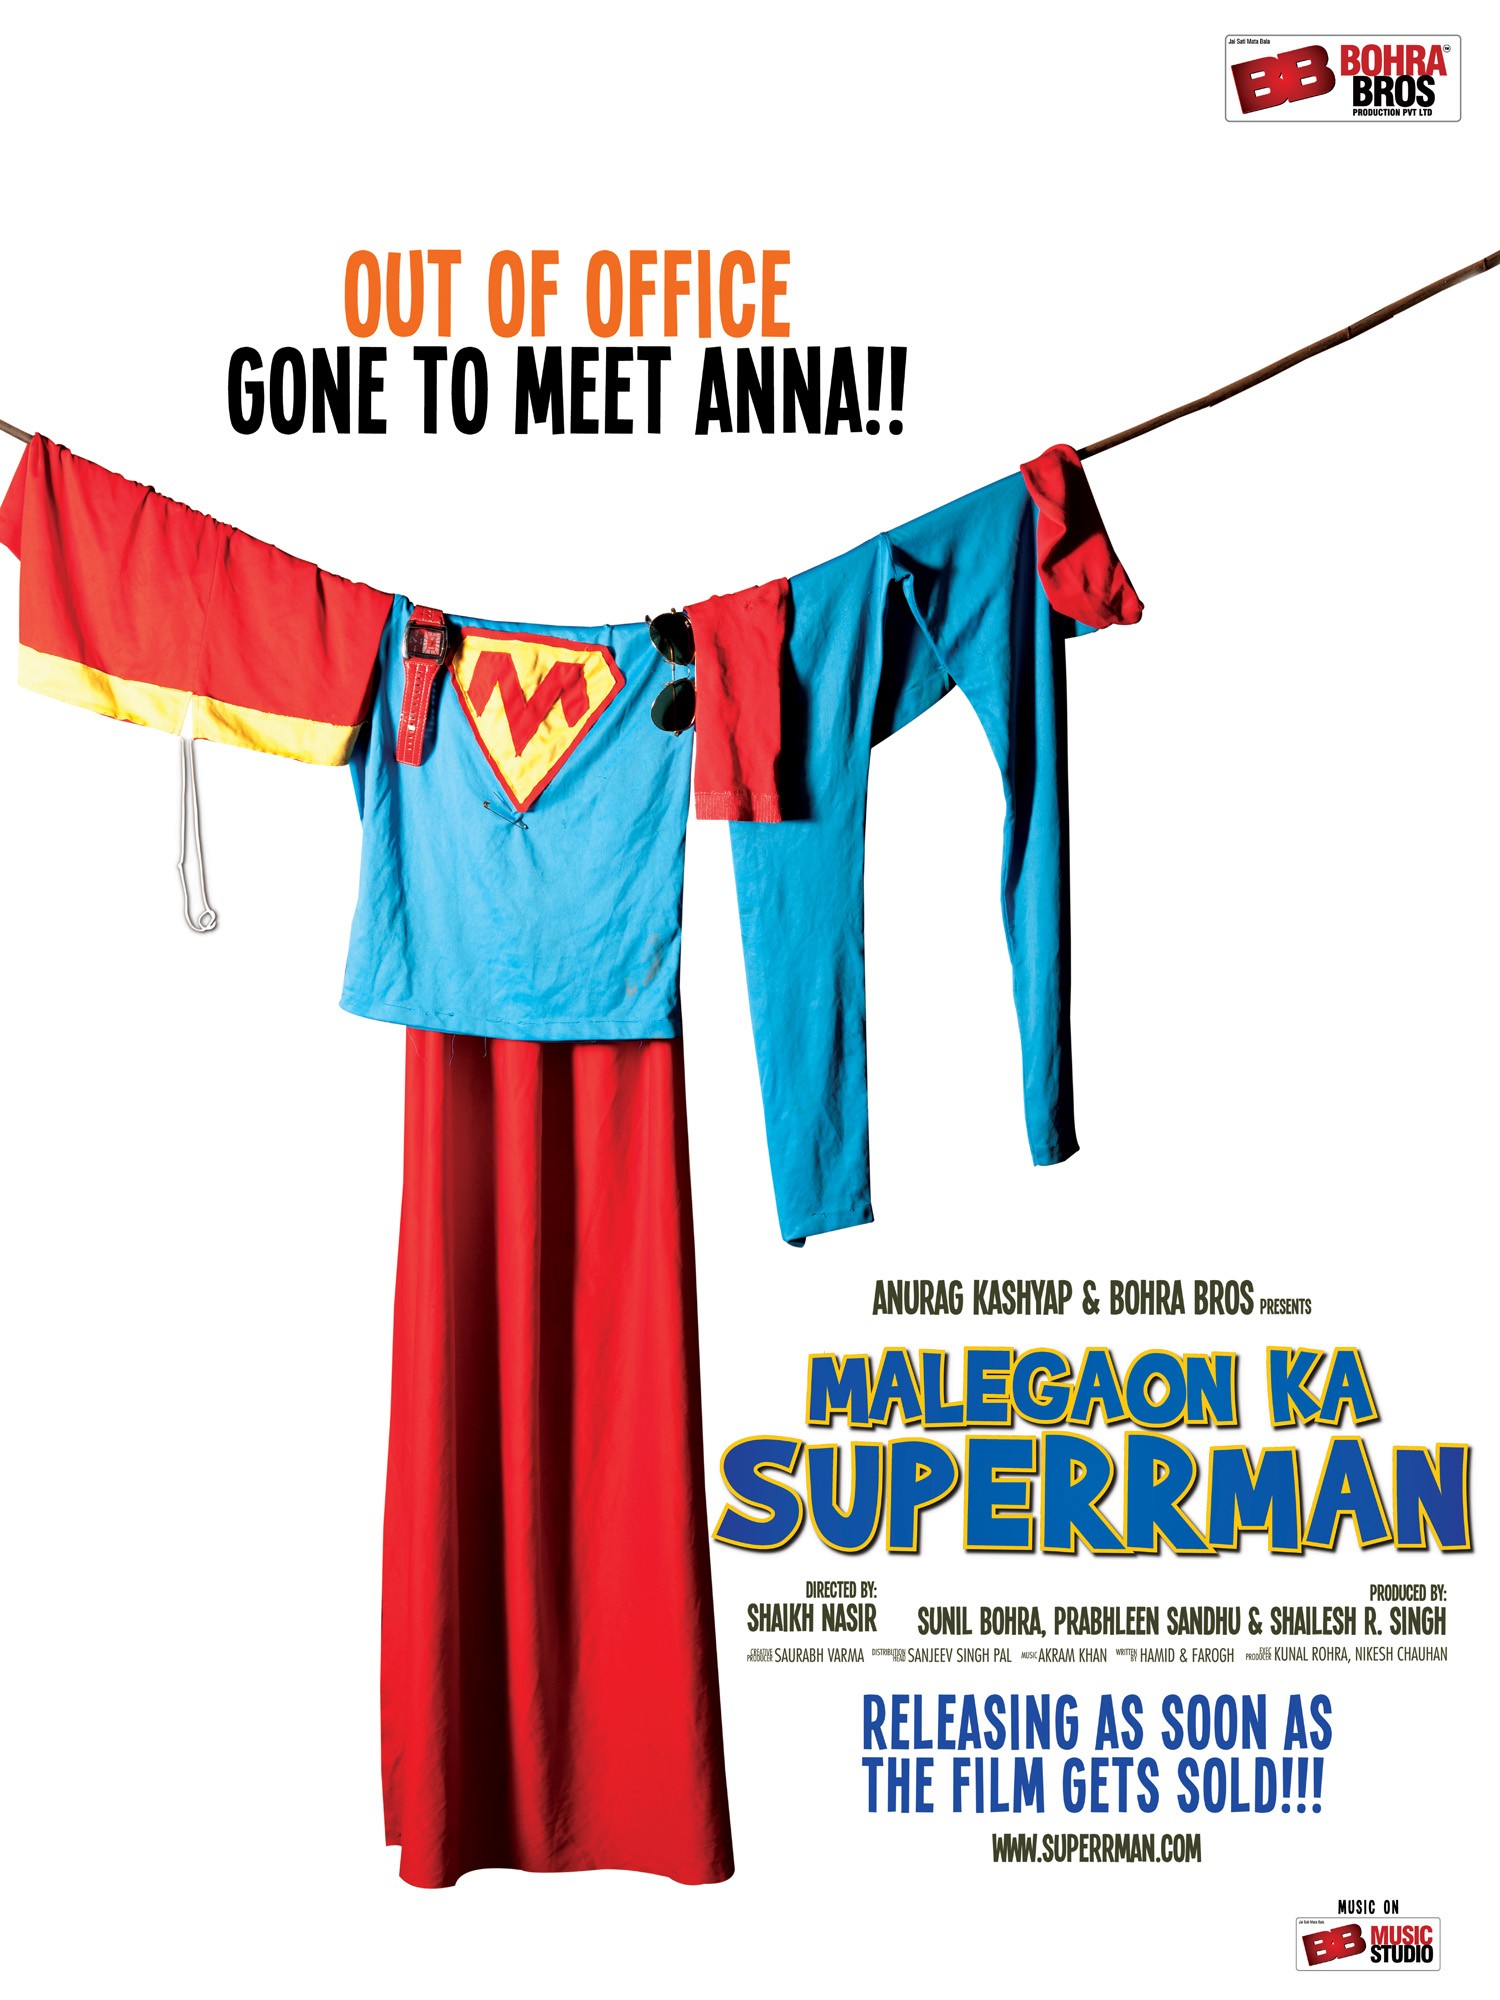 Mega Sized Movie Poster Image for Malegaon ka Superrman (#1 of 4)